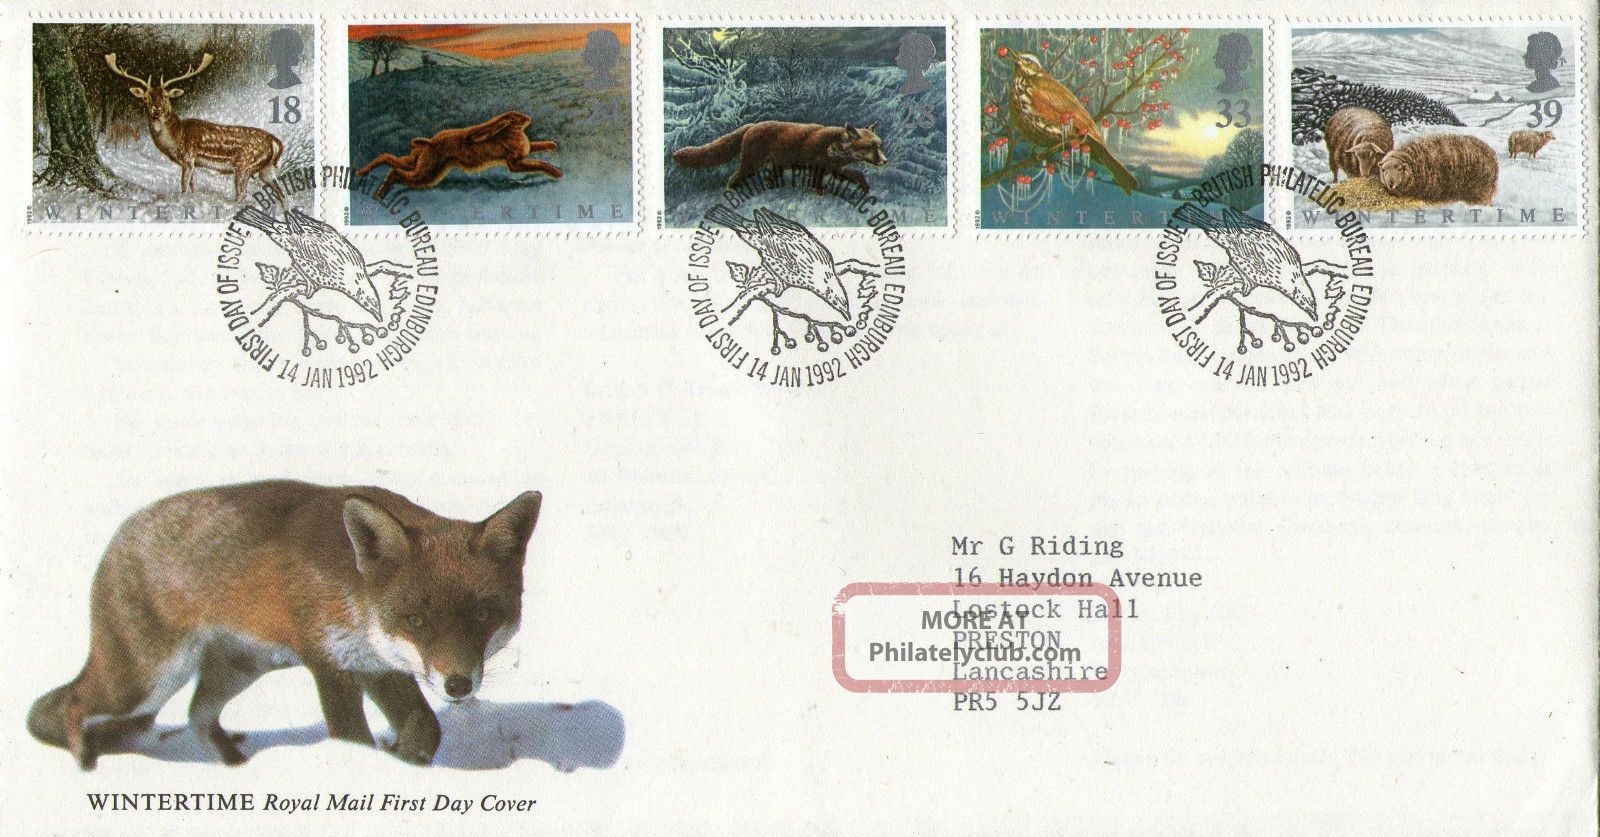 14 January 1992 Wildlife Royal Mail First Day Cover Bureau Shs Animal Kingdom photo